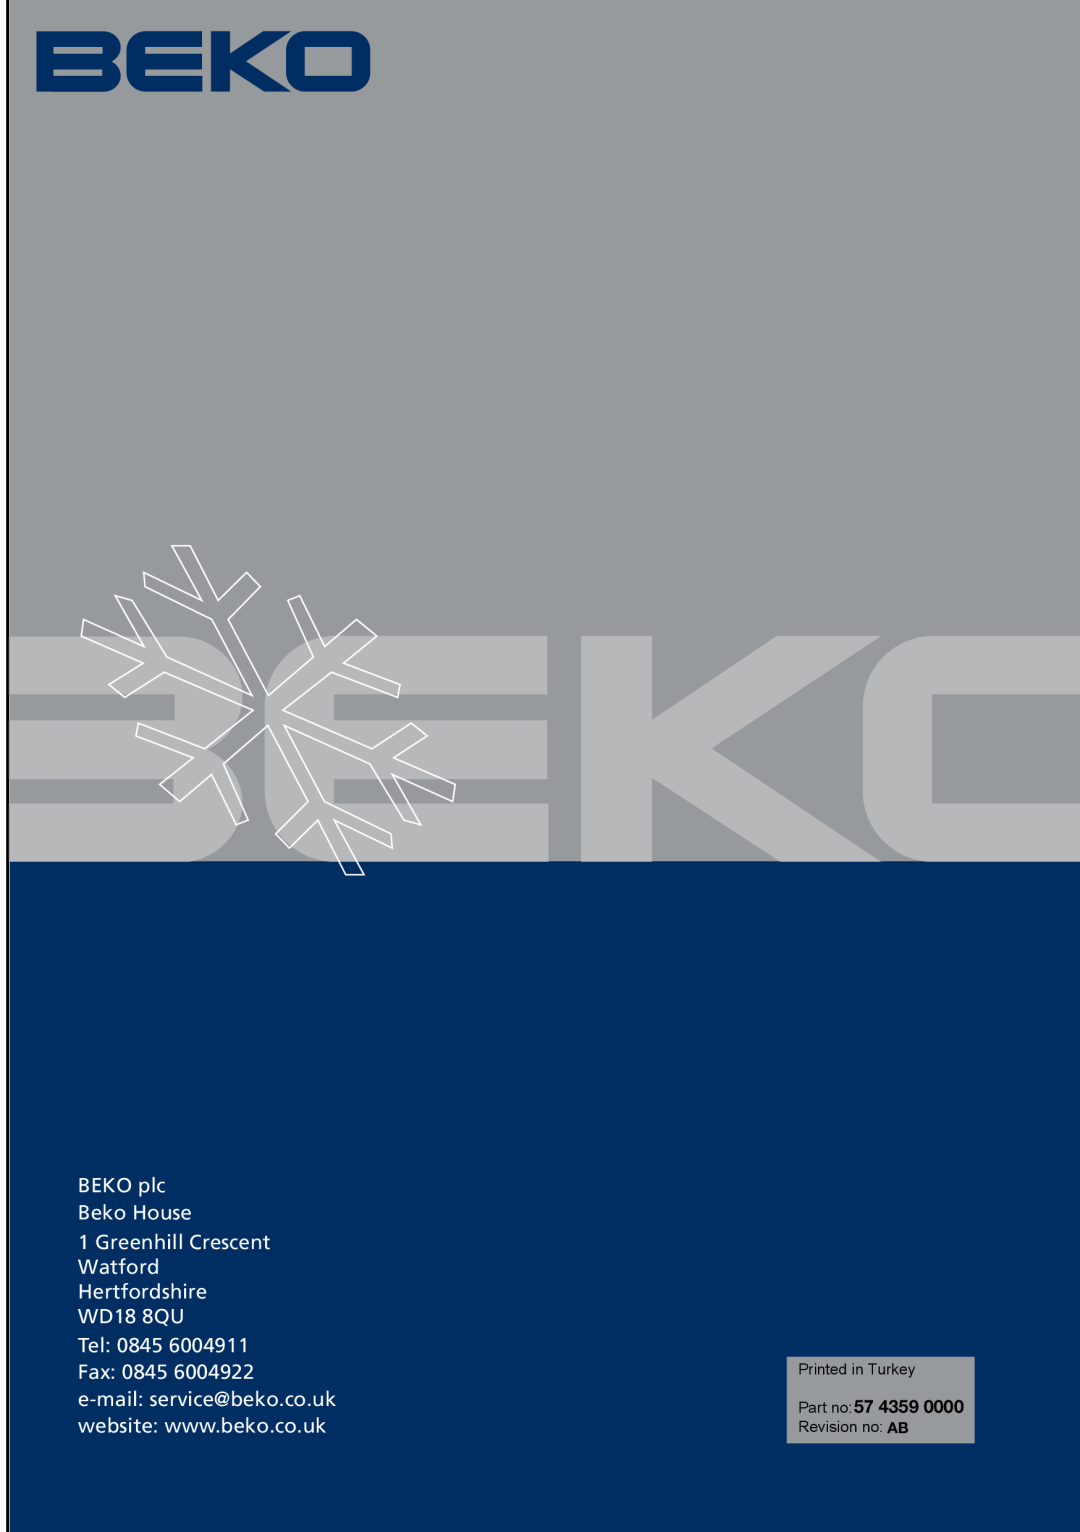 Beko lxd 6145 b manual BEKO plc Beko House 1 Greenhill Crescent Watford Hertfordshire, Part no57 4359, Printed in Turkey 